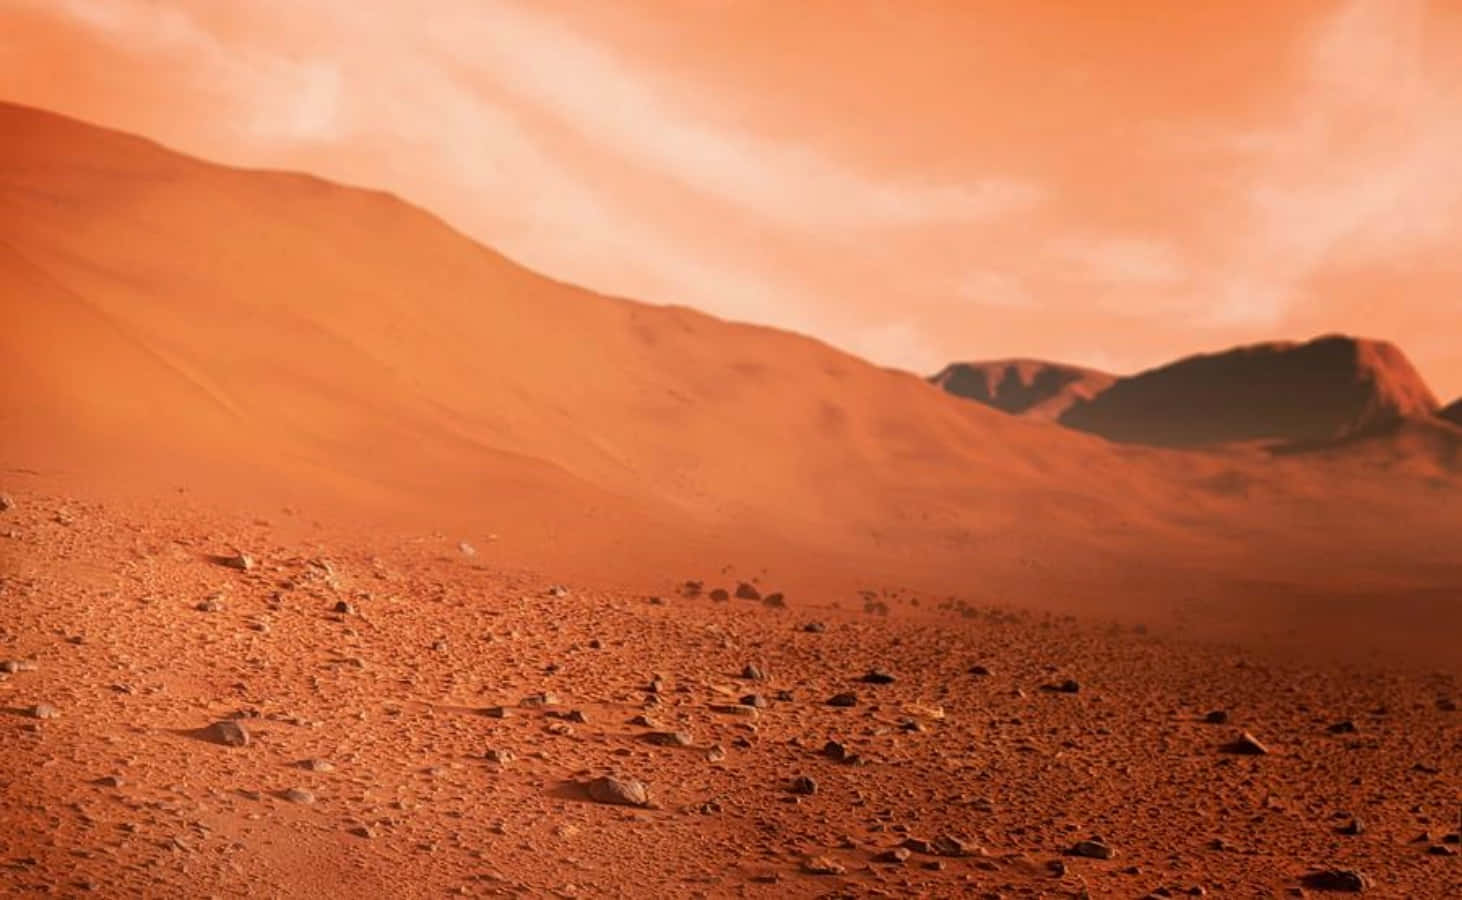 Awe Inspiring View of the Martian Surface